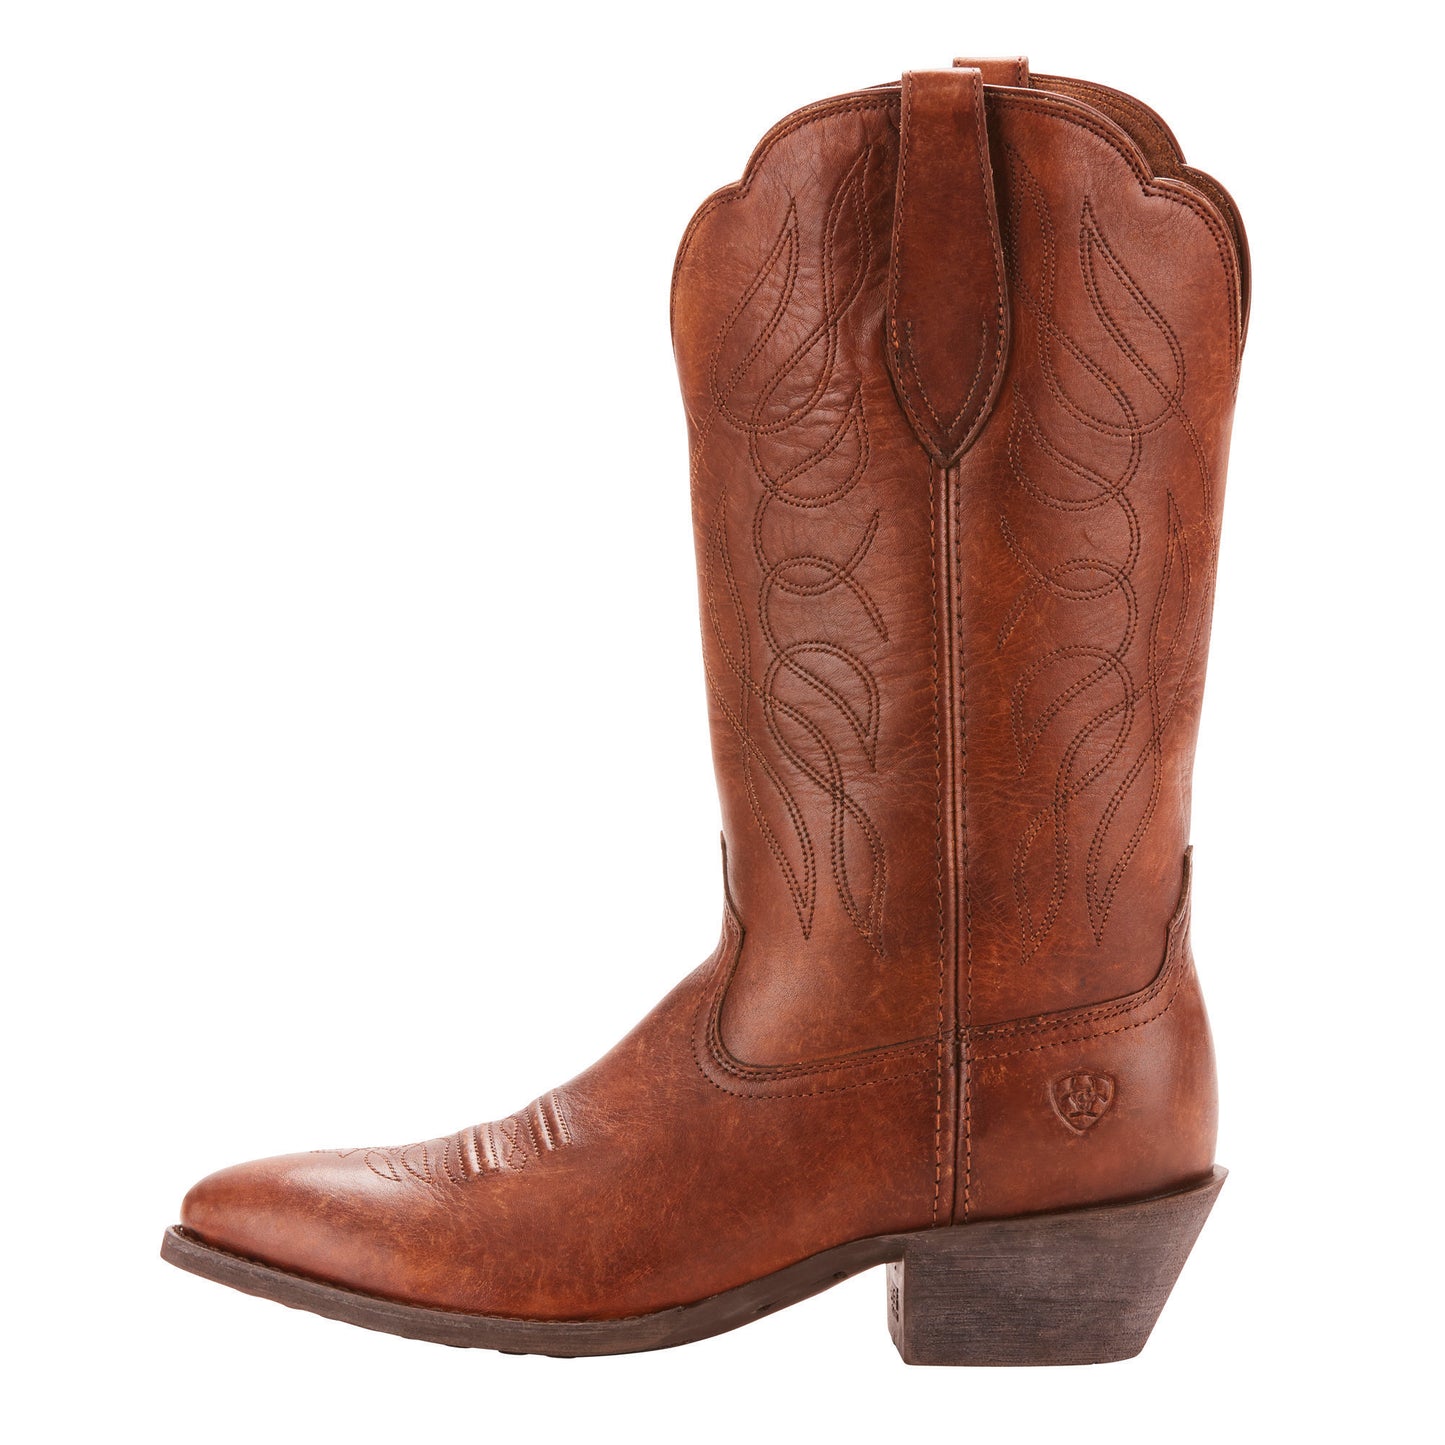 Women's Ariat Heritage R Toe Western Boot Brown #10025121